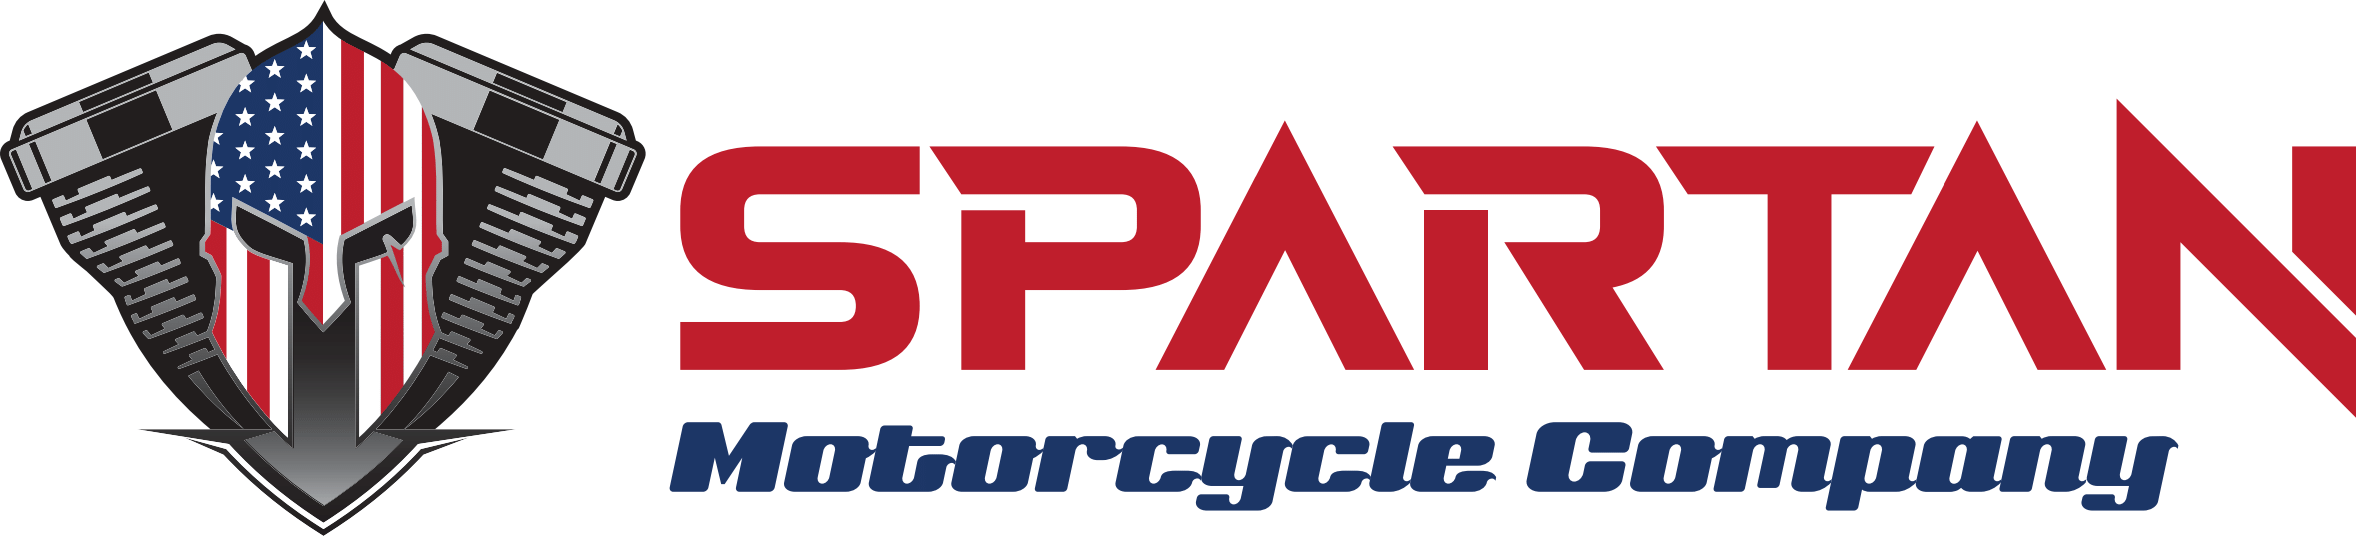 Spartan Motorcycle Company, LLC